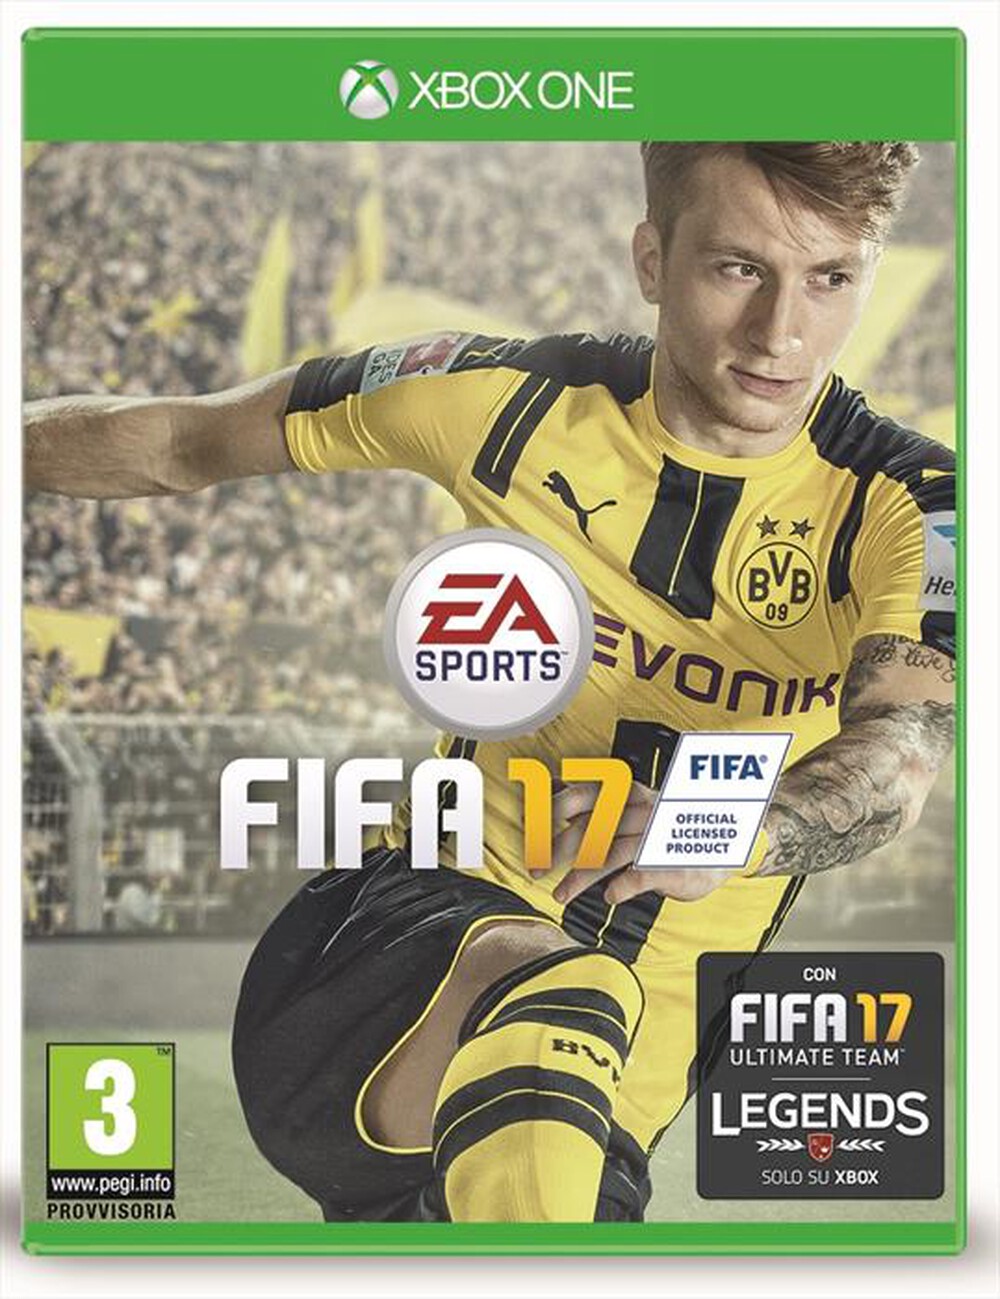 "ELECTRONIC ARTS - FIFA 17 Xbox One - "